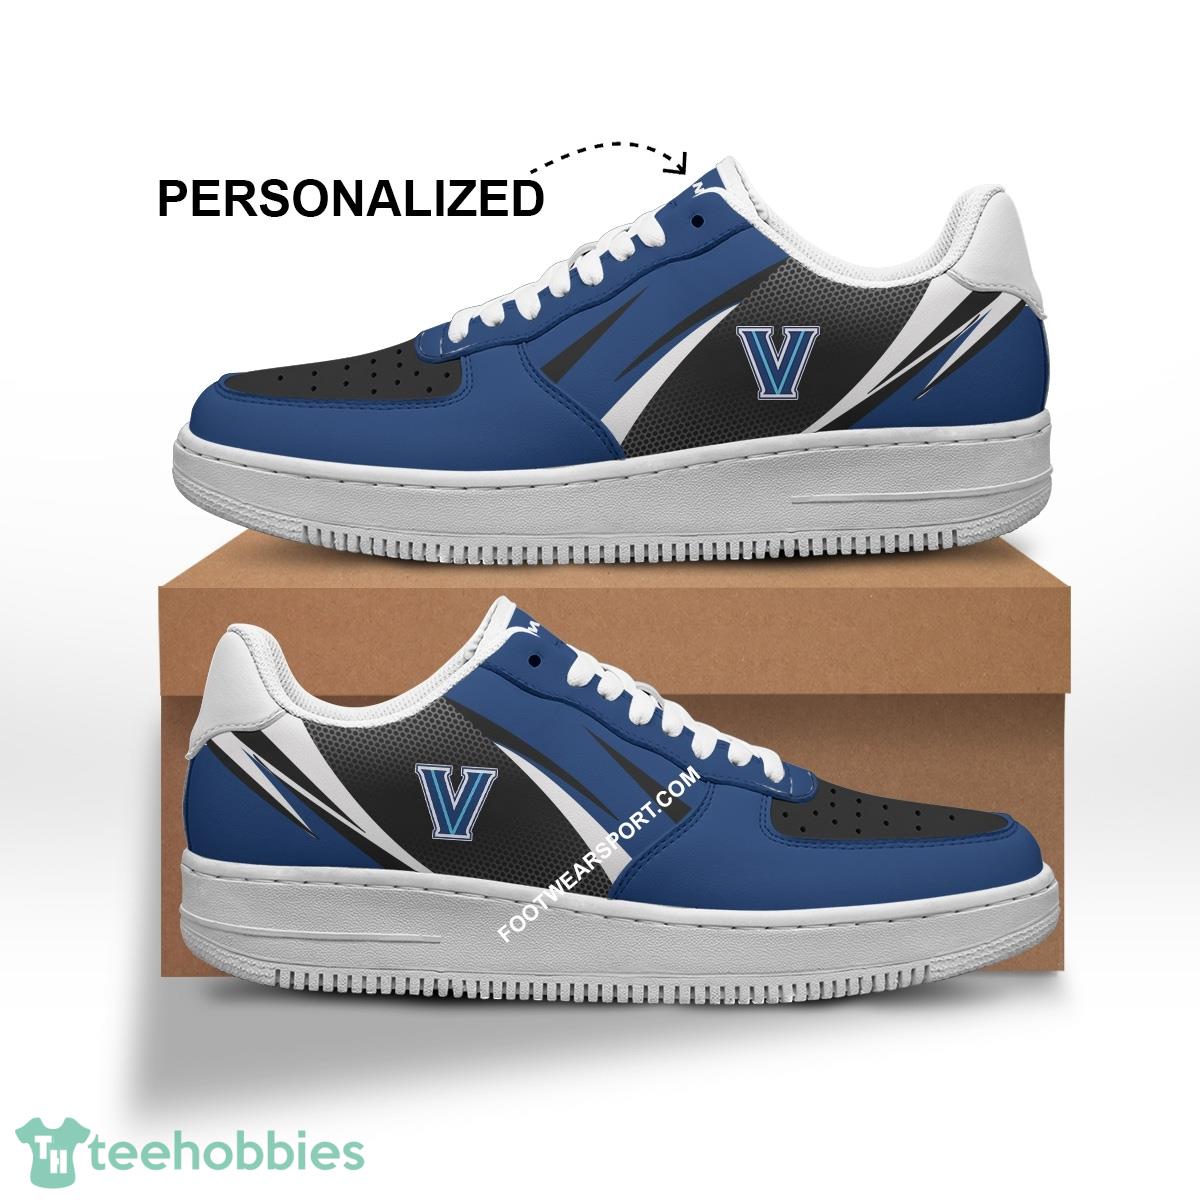 Custom Name Villanova Wildcats Air Force 1 Shoes Trending Design For Men Women - NCAA2 Villanova Wildcats Air Force 1 Shoes Personalized Style 1